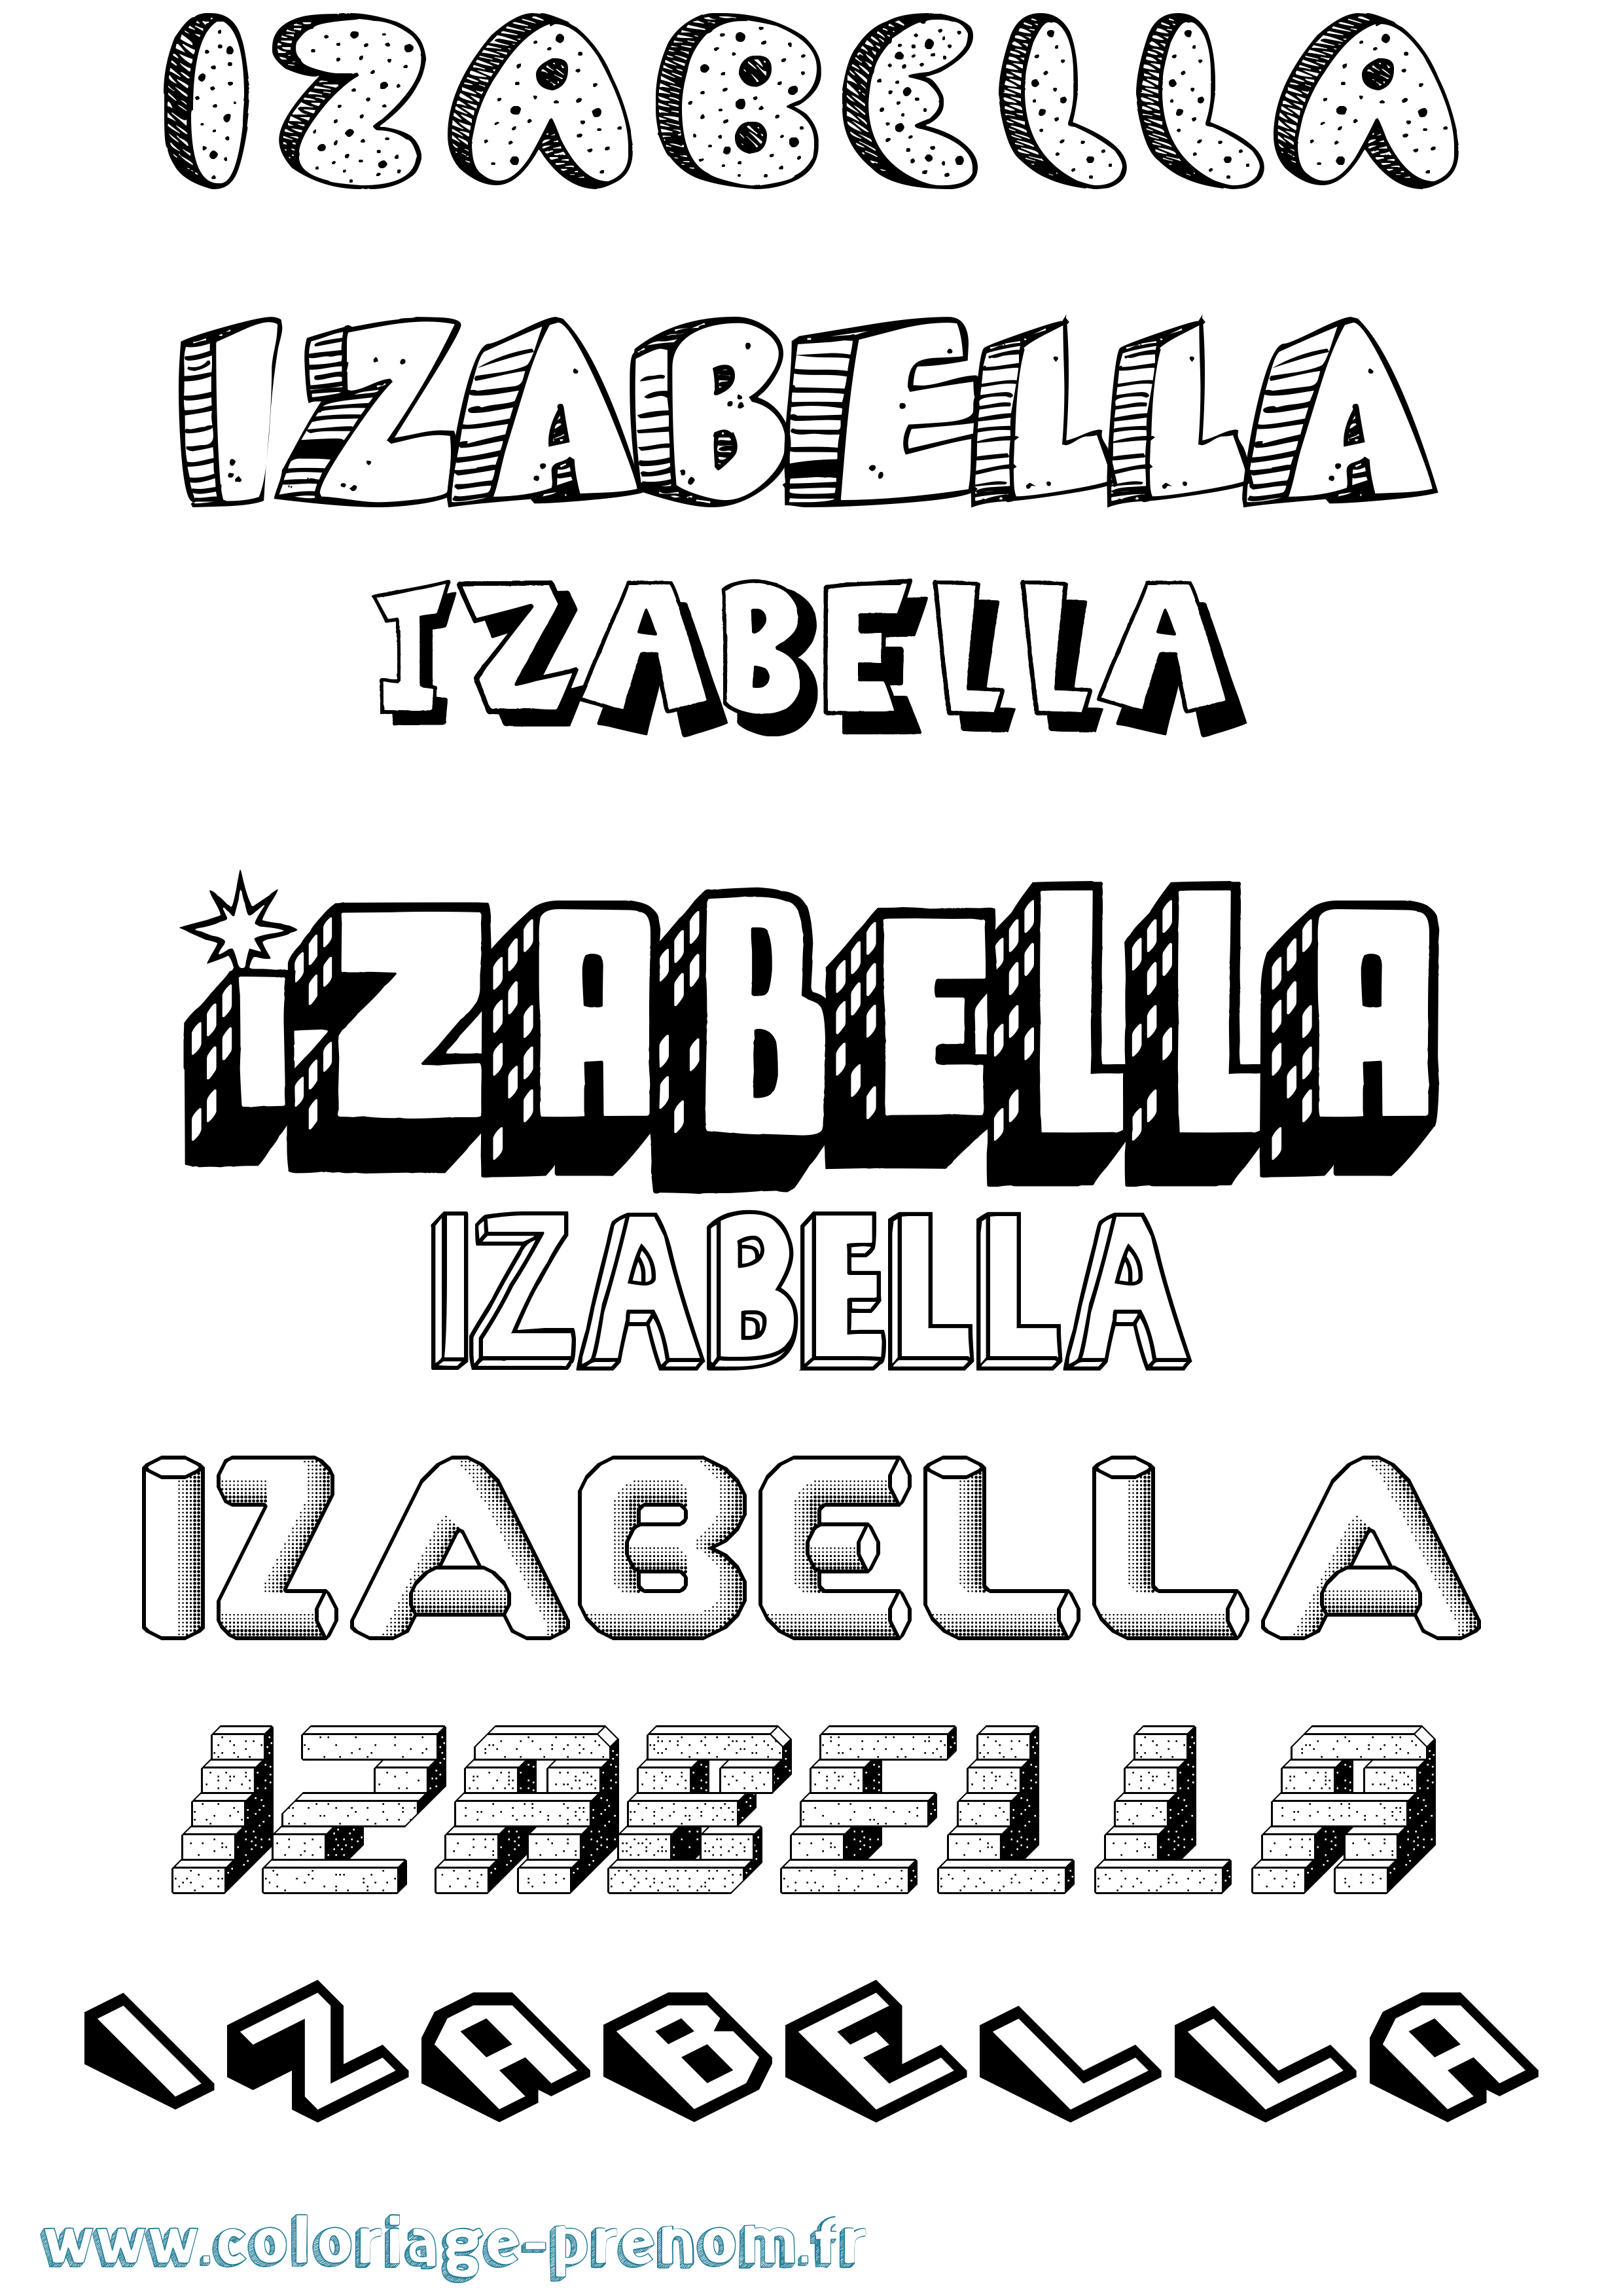 Coloriage prénom Izabella Effet 3D